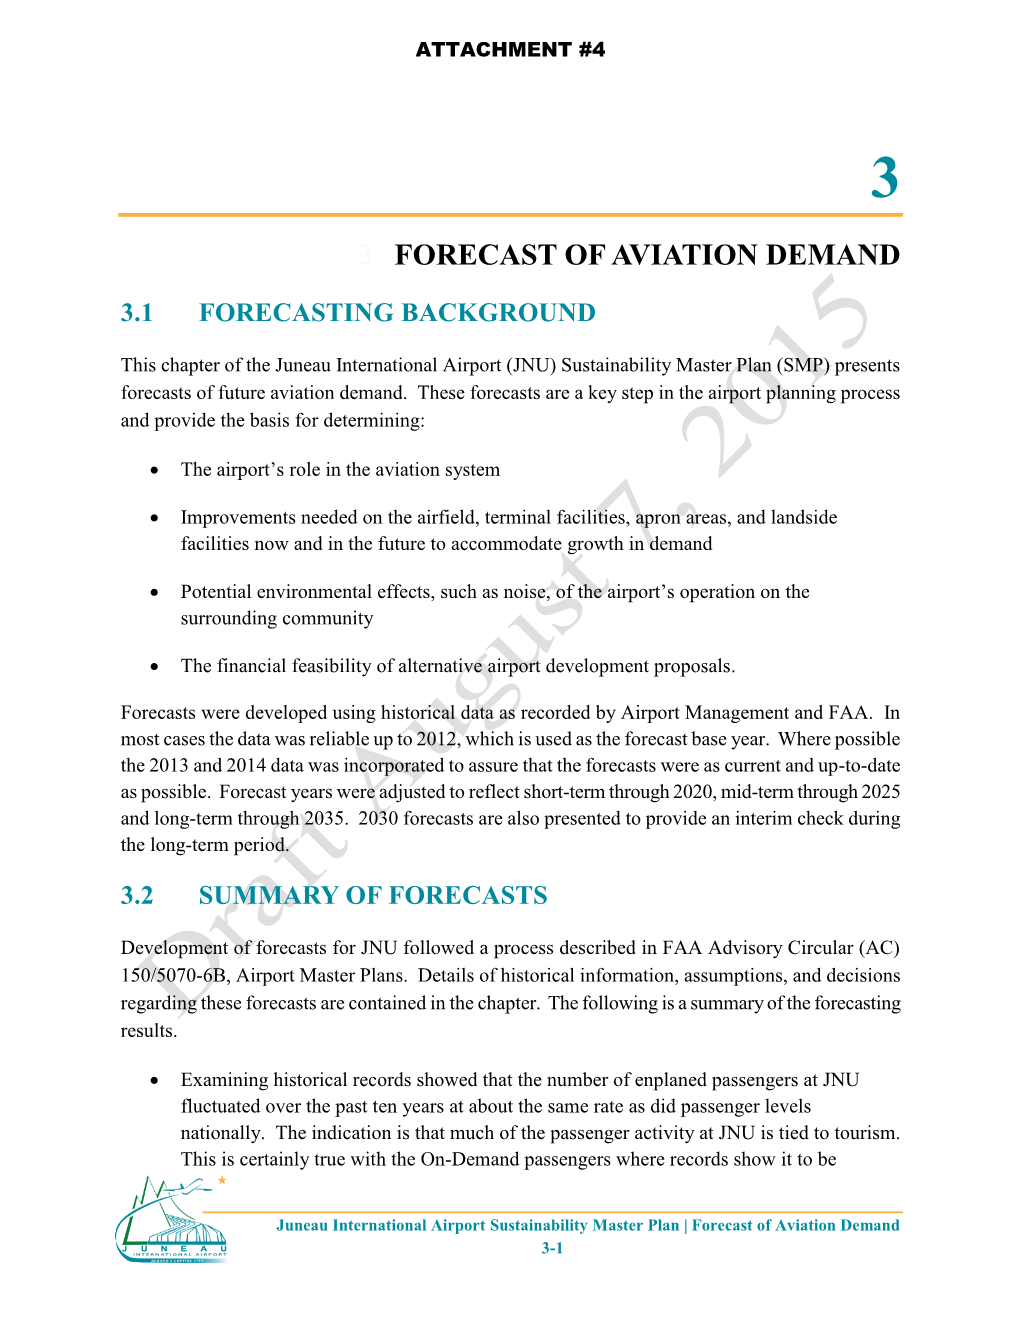 Forecast of Aviation Demand 3-1 ATTACHMENT #4